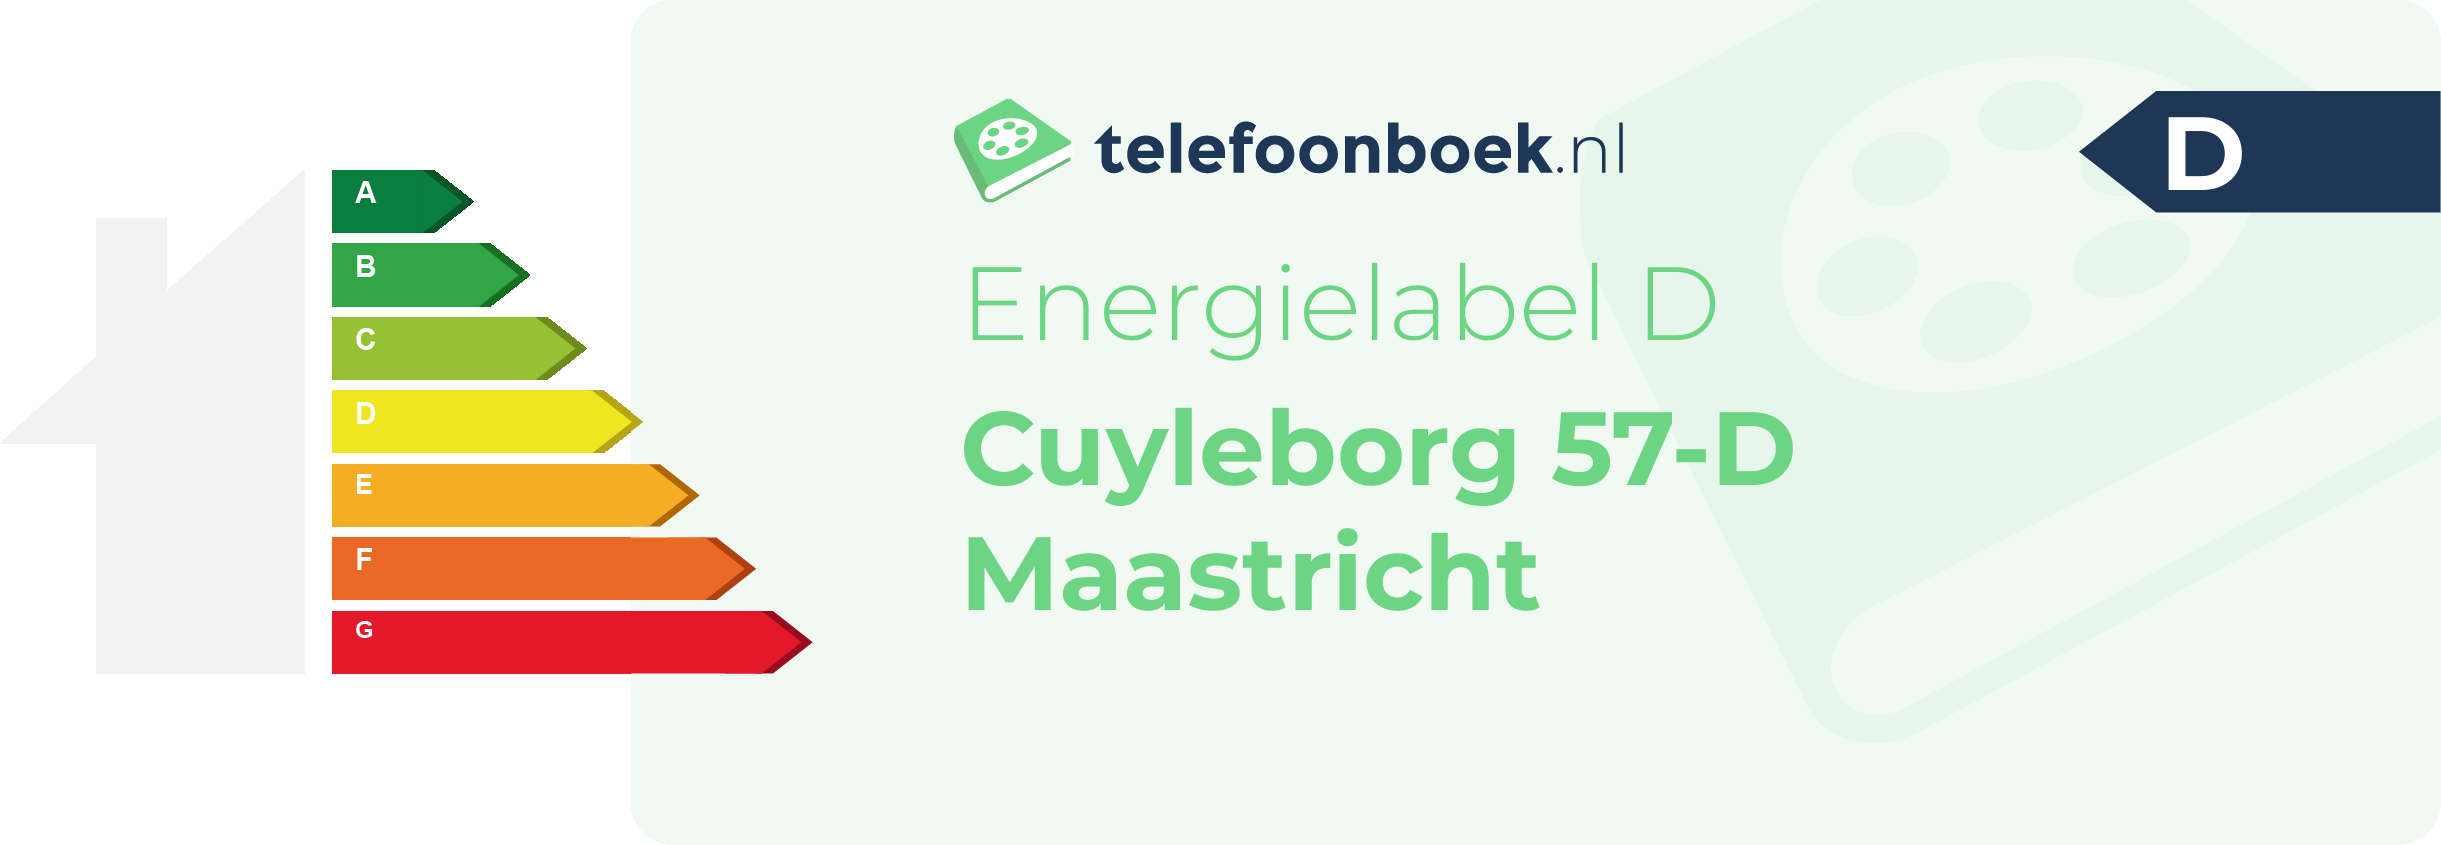 Energielabel Cuyleborg 57-D Maastricht